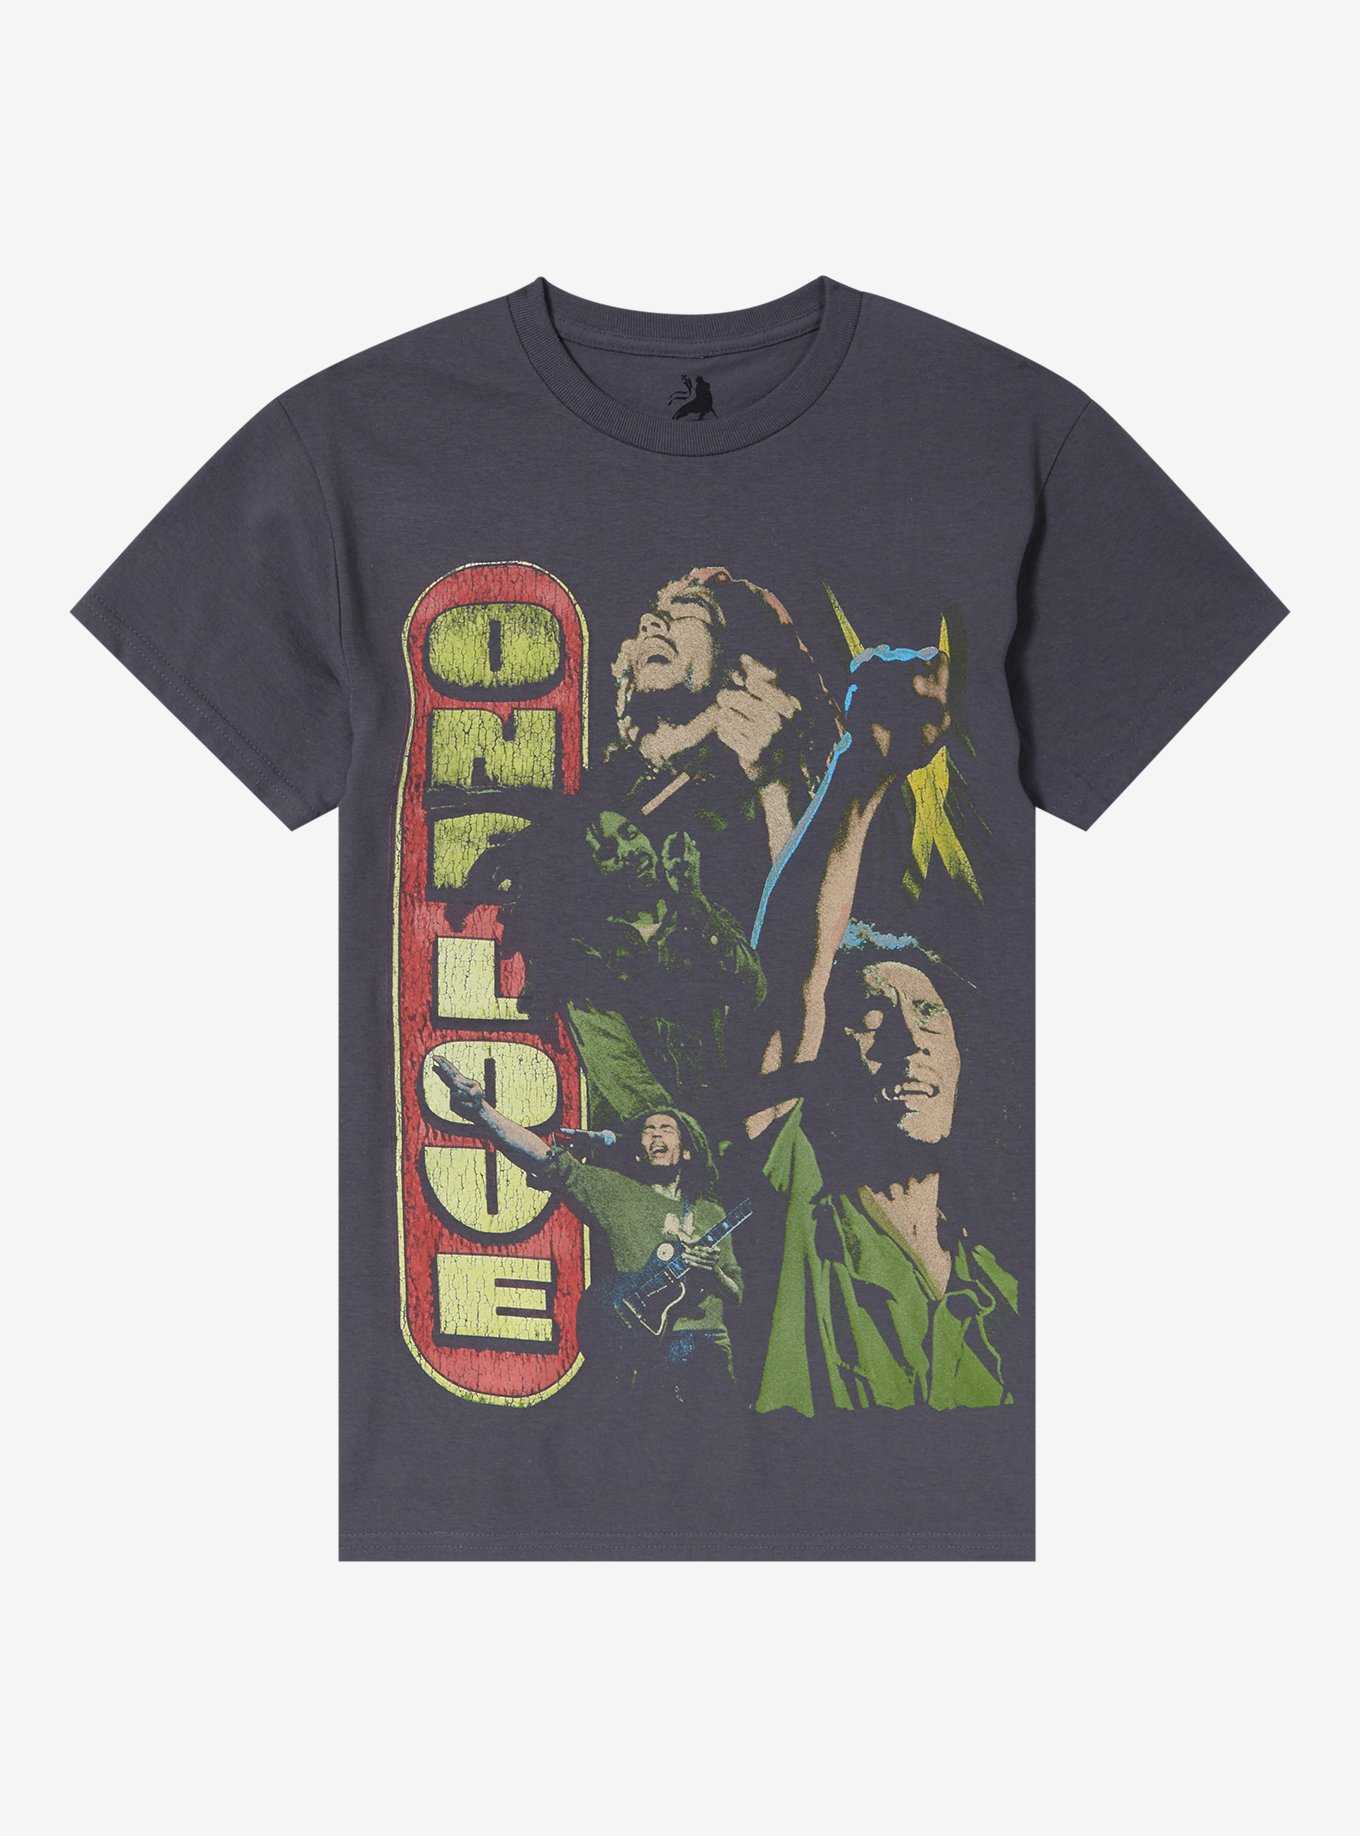 Bob Marley One Love Collage Boyfriend Fit Girls T-Shirt, , hi-res